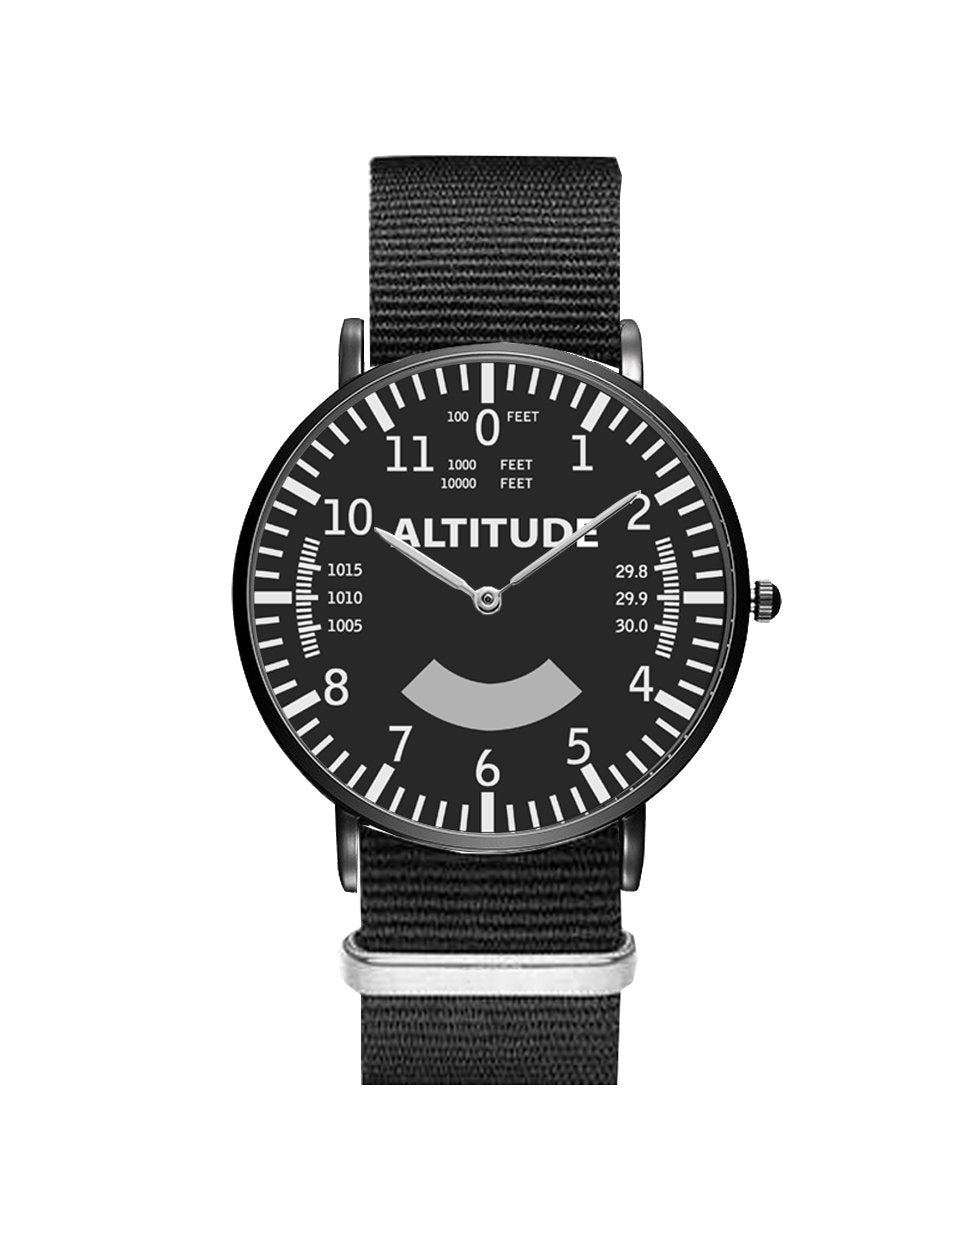 Airplane Instrument Series (Altitude) Leather Strap Watches Pilot Eyes Store Black & Black Nylon Strap 